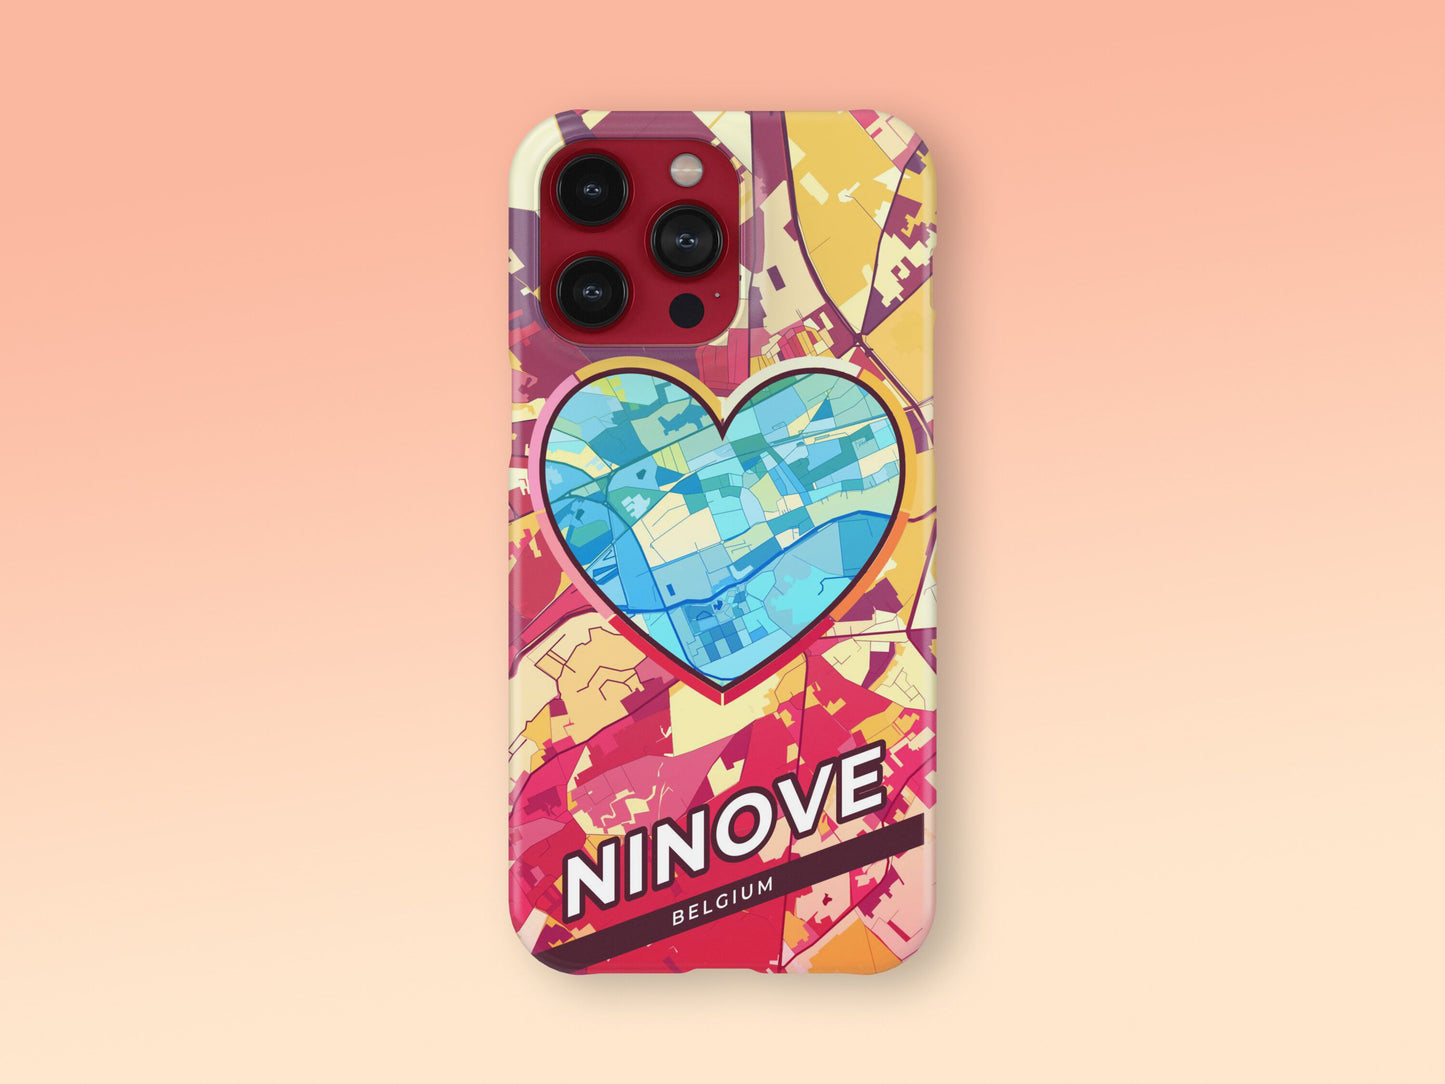 Ninove Belgium slim phone case with colorful icon. Birthday, wedding or housewarming gift. Couple match cases. 2